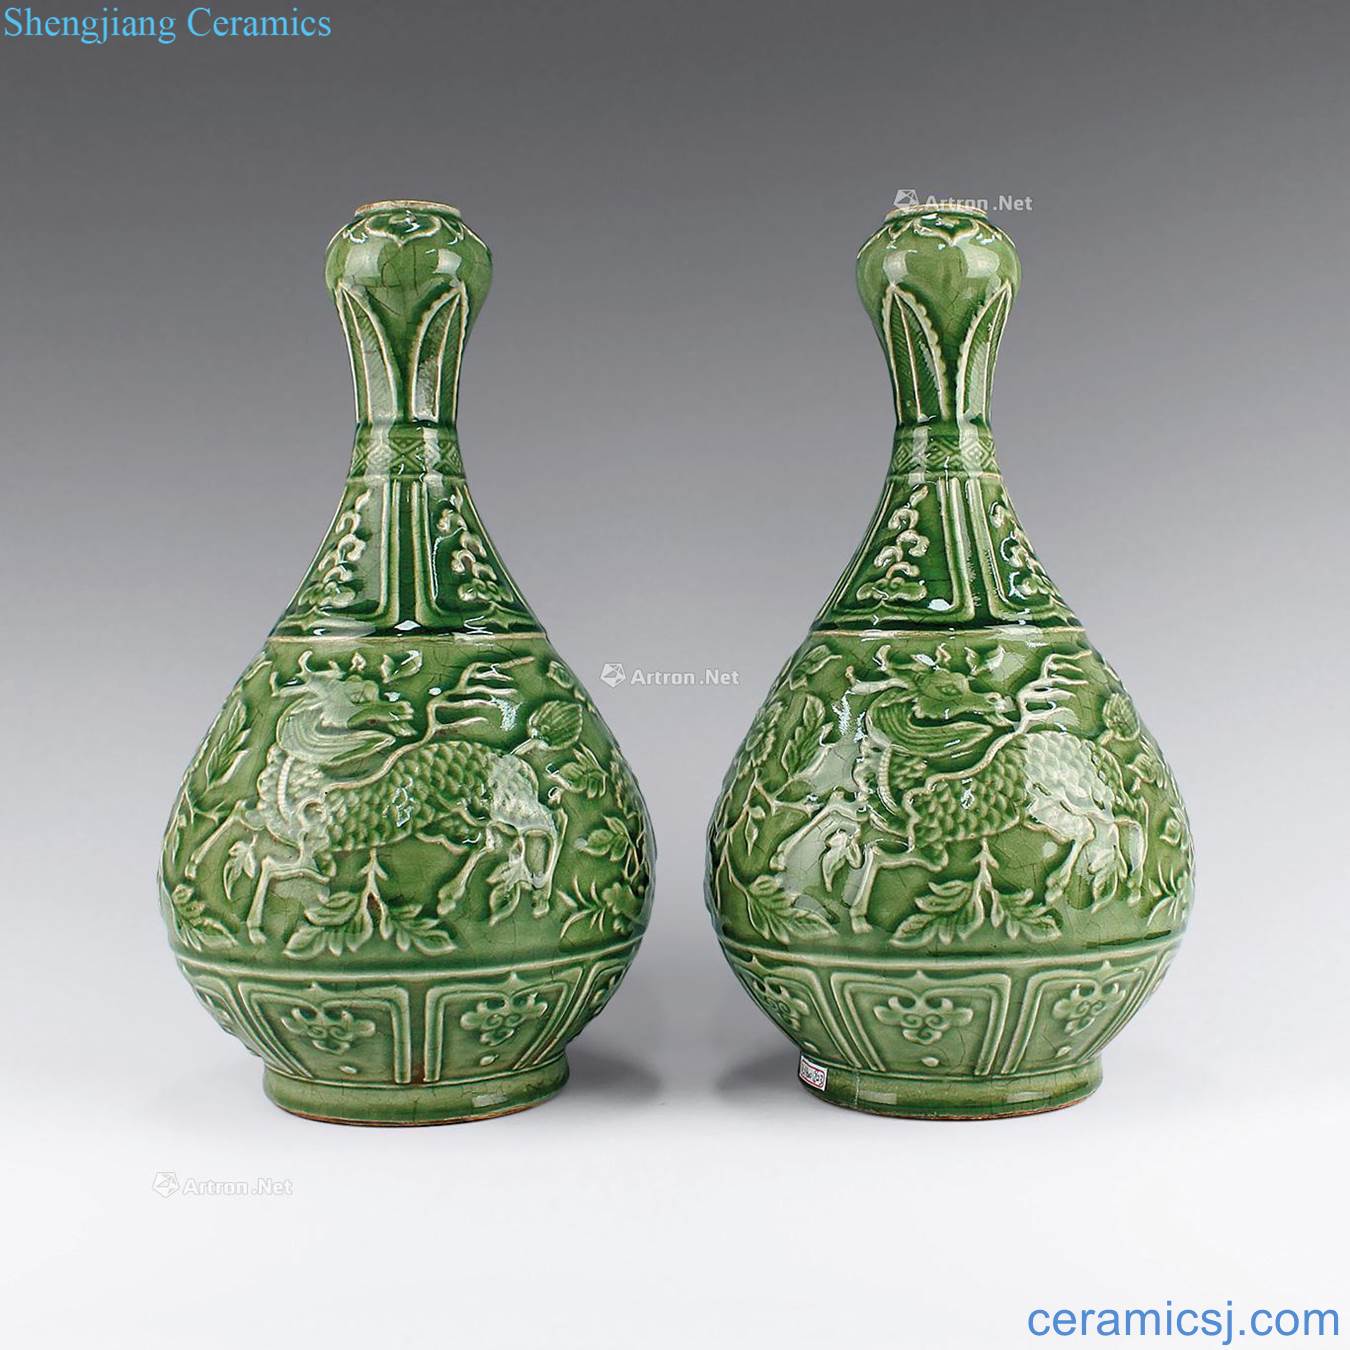 The song dynasty Longquan celadon kylin grain garlic bottles